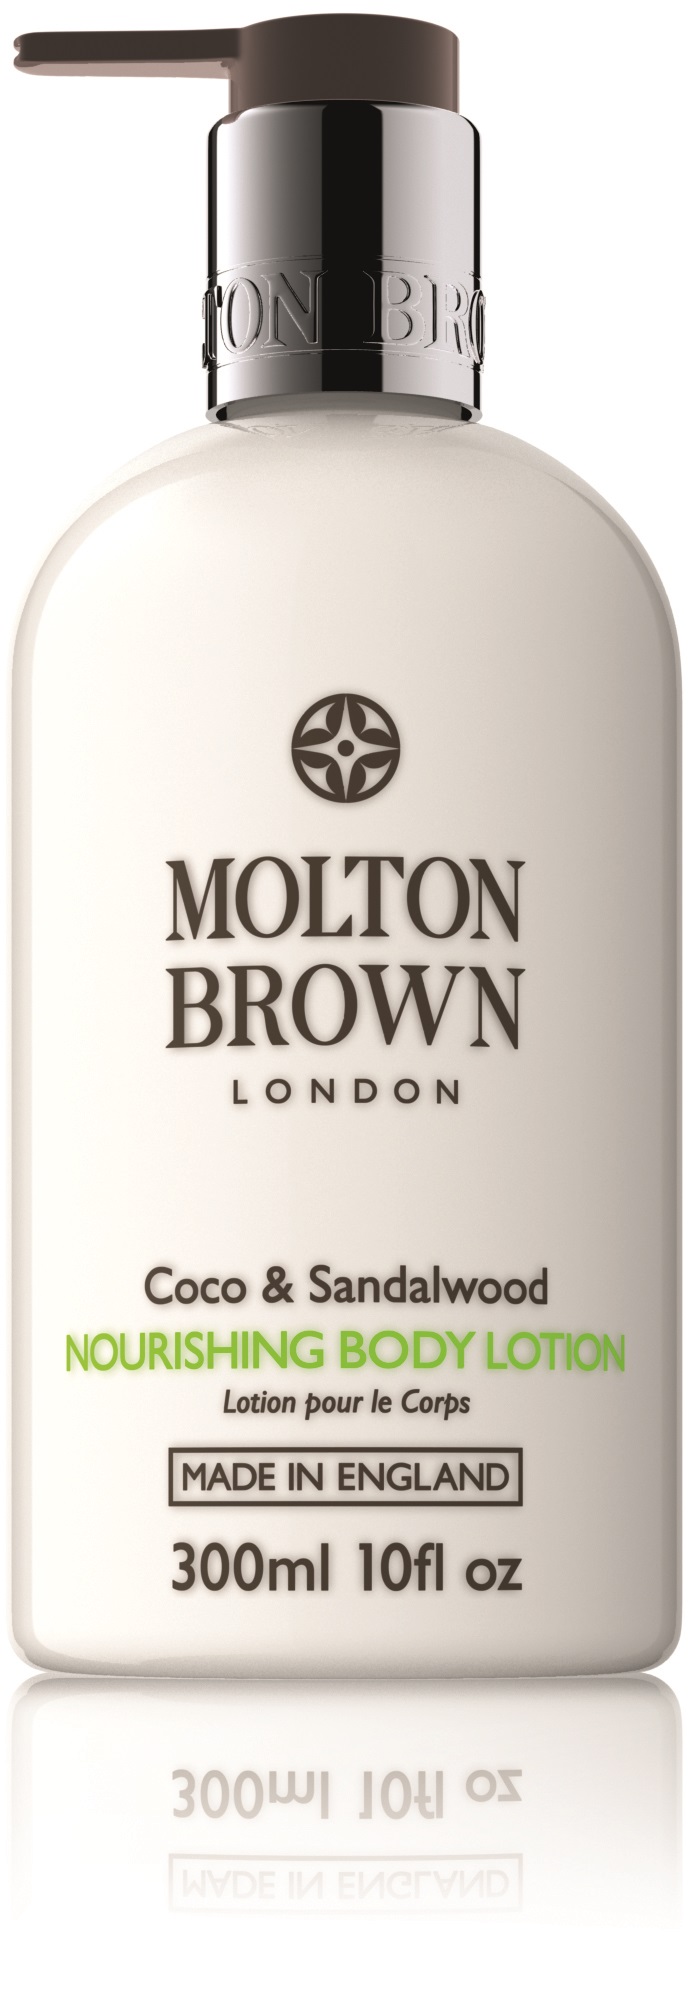 Molton Brown Coco & Sandalwood Body Lotion